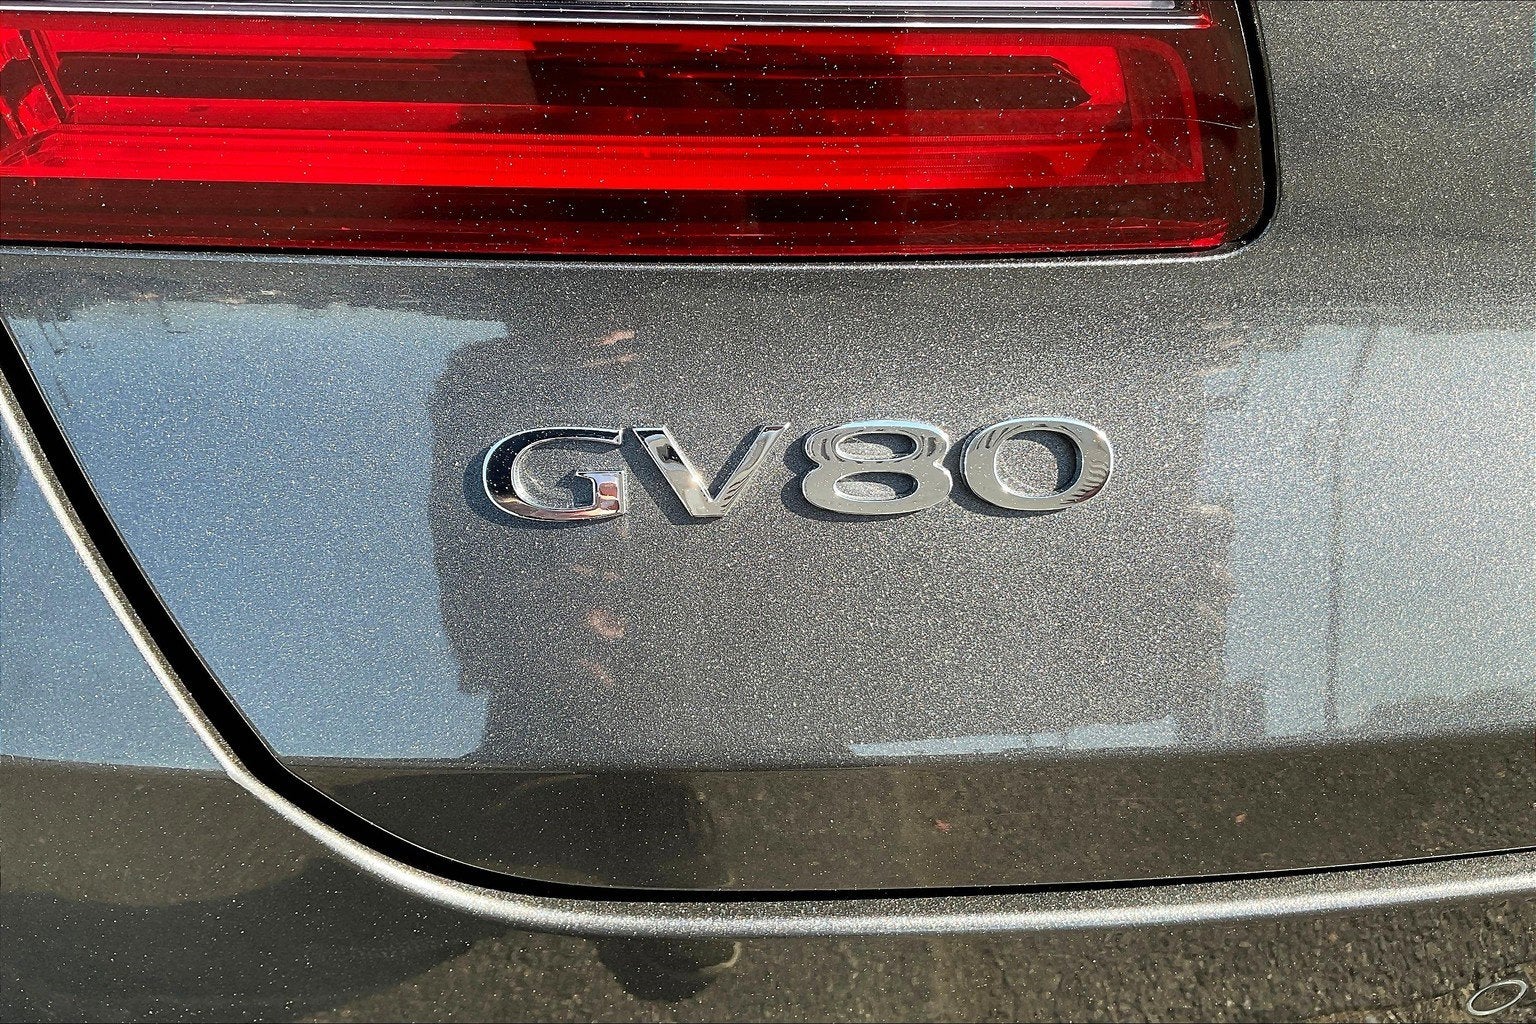 2021 Genesis GV80 3.5T